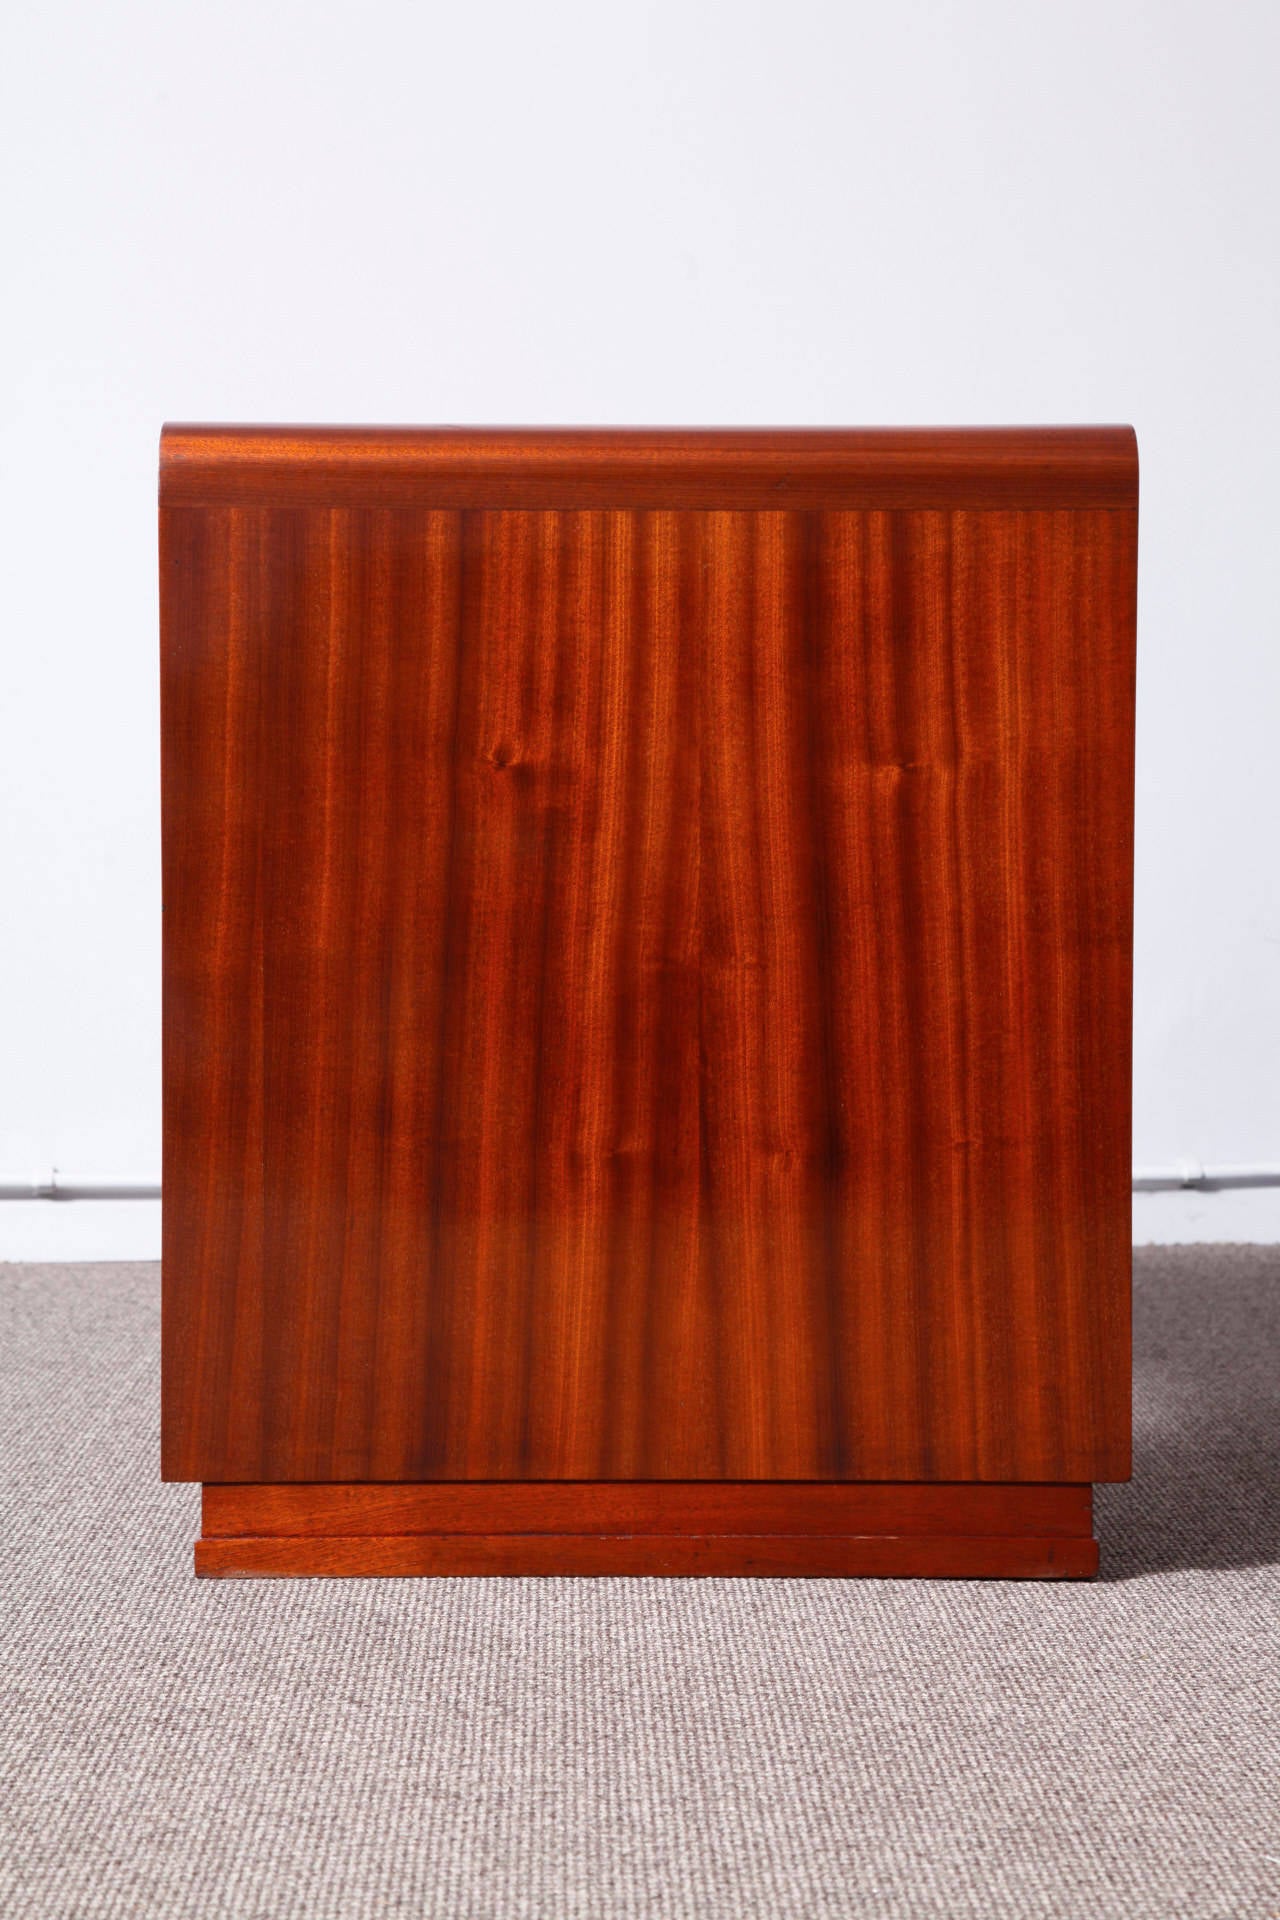 Mahogany Art Deco Console Table or Desk